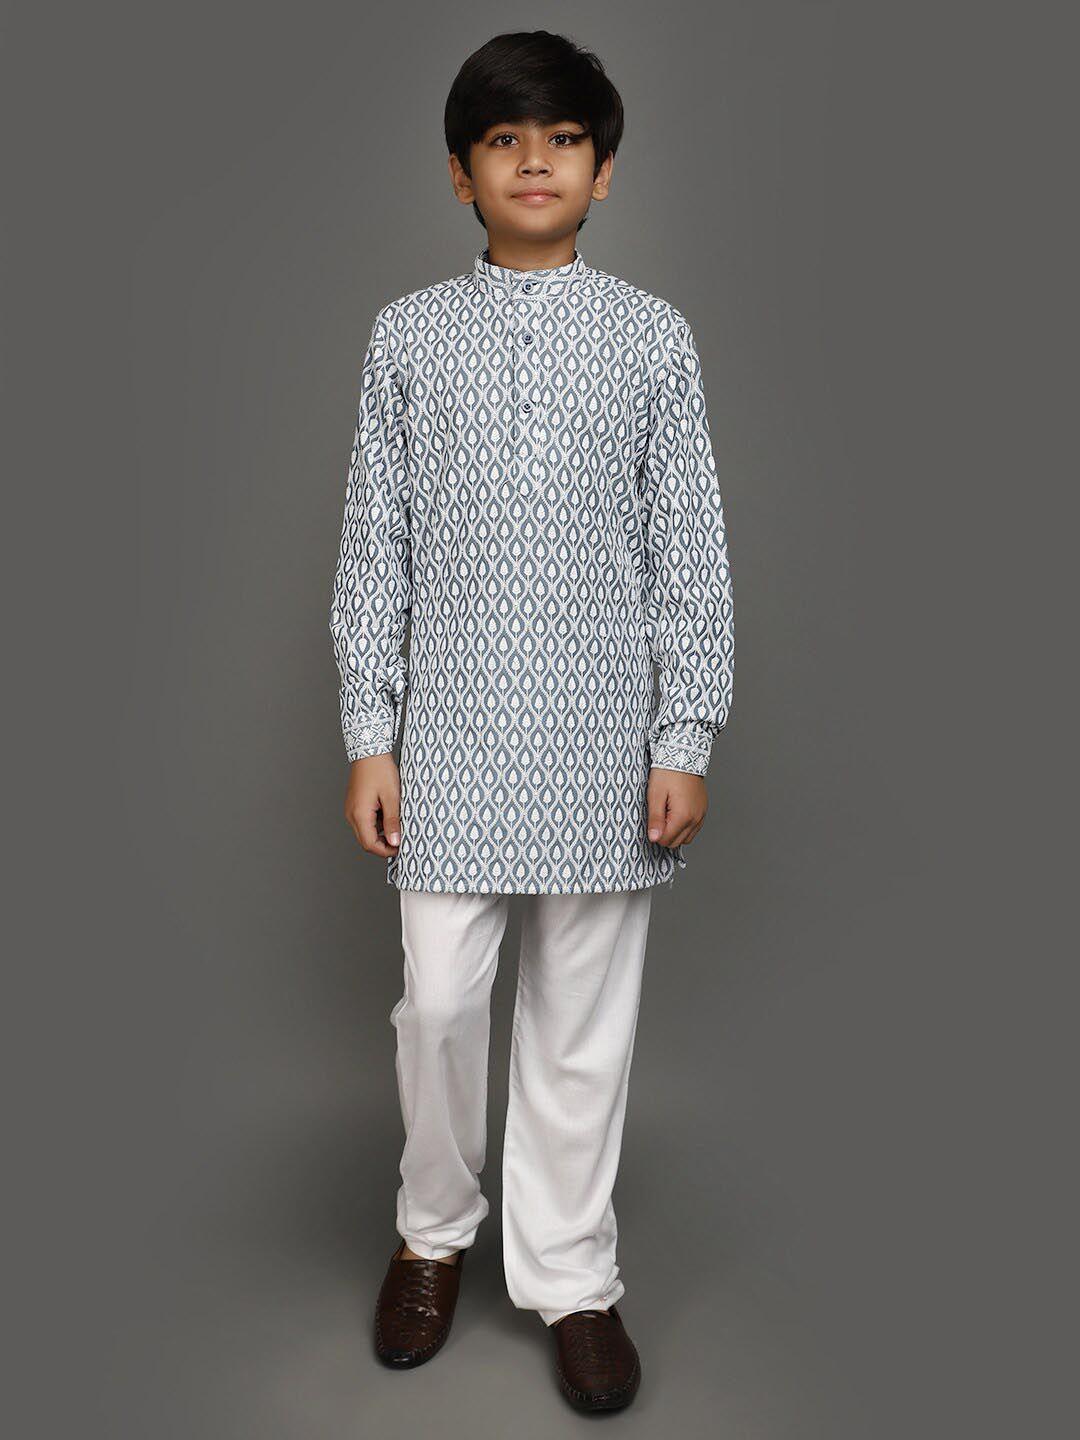 v-mart boys ethnic motifs embroidered kurta with pyjama